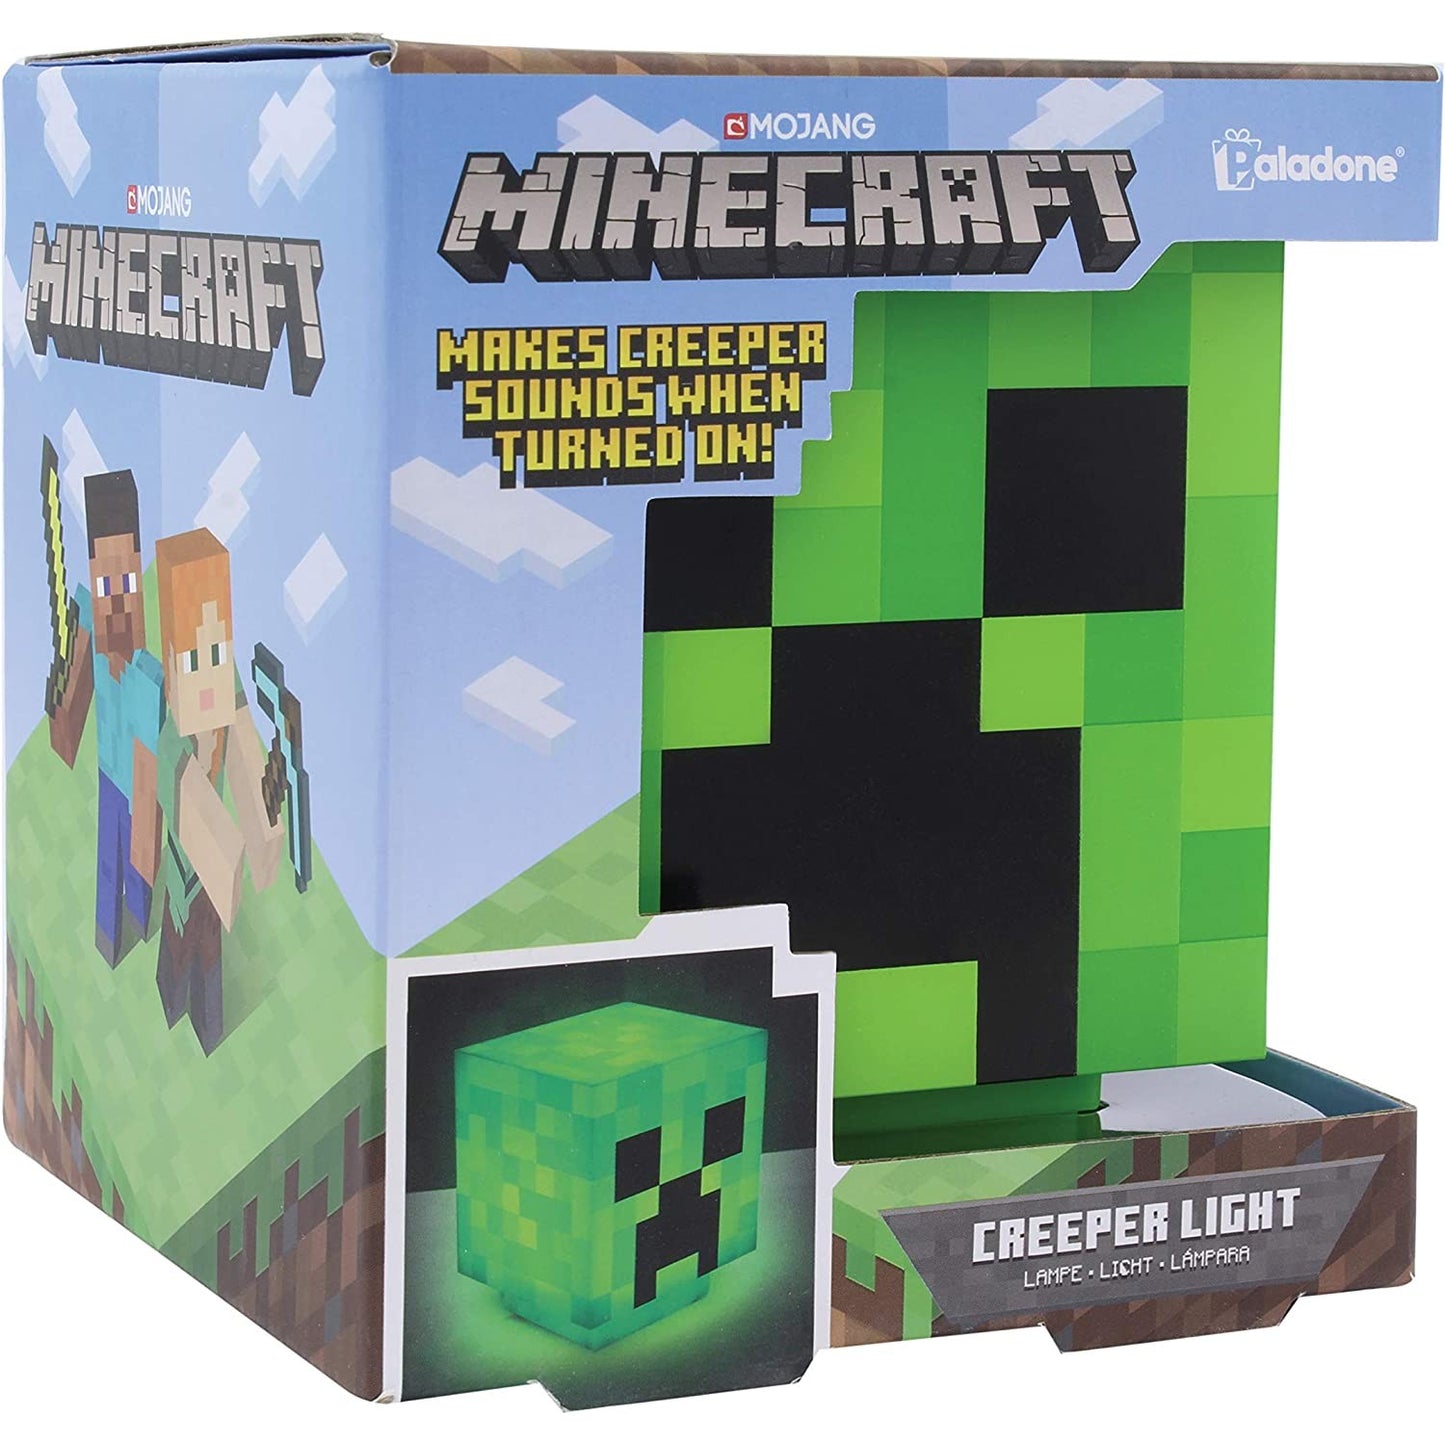 A box containing a Minecraft creeper light.